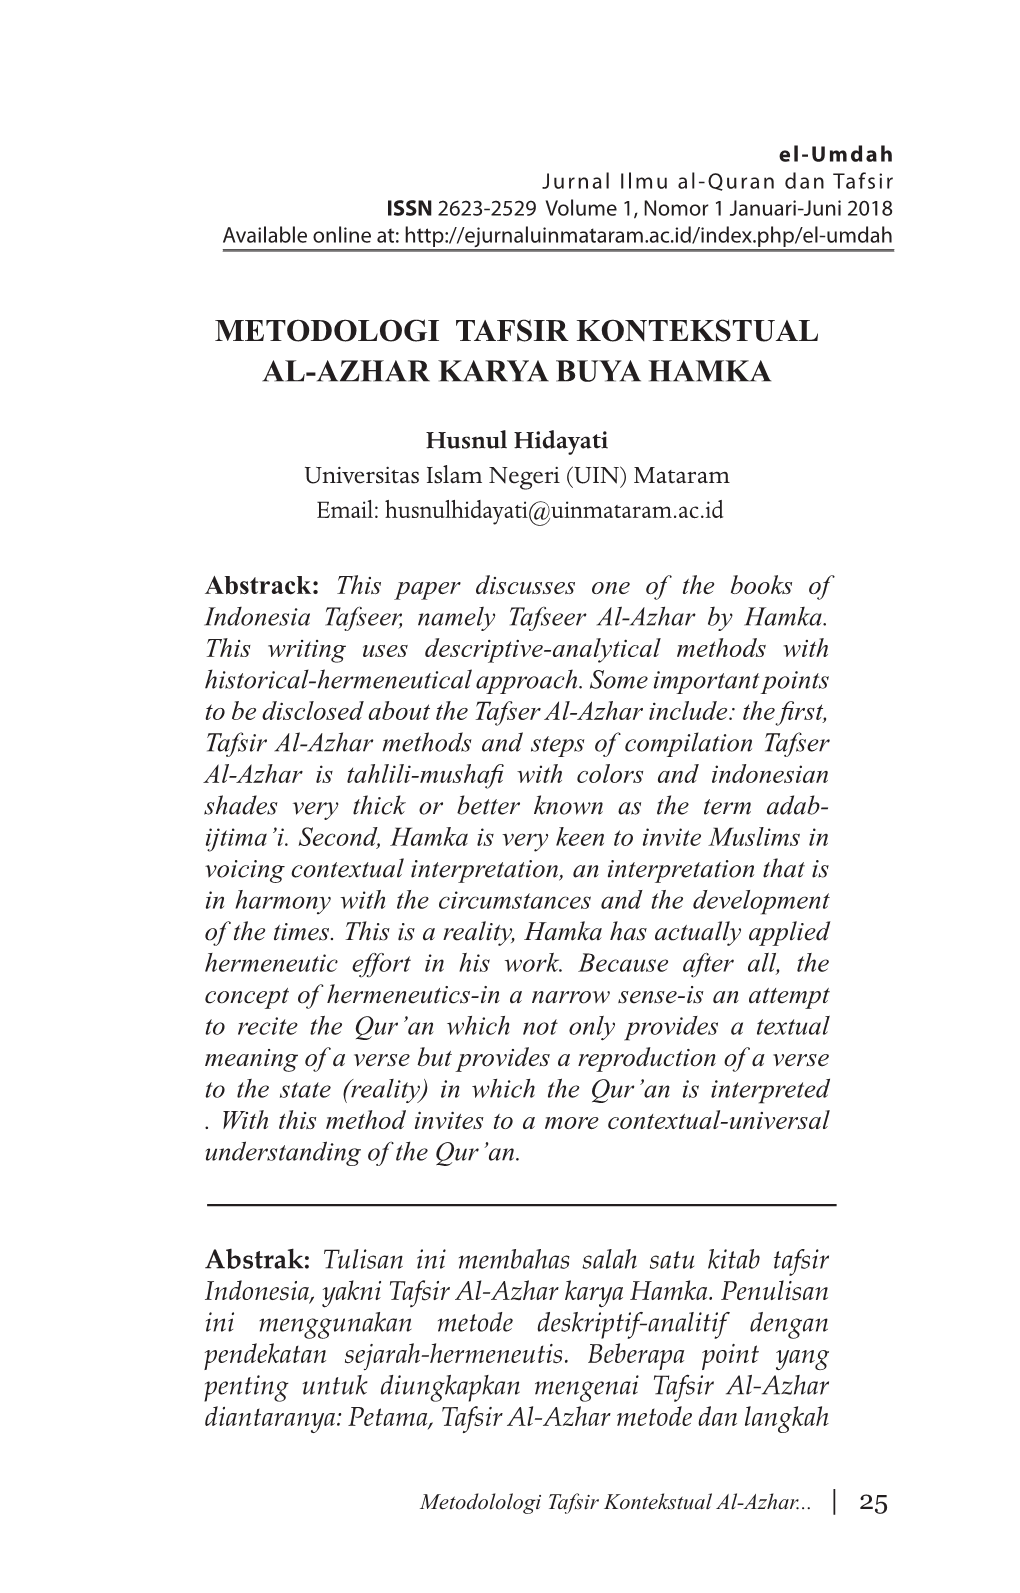 Metodologi Tafsir Kontekstual Al-Azhar Karya Buya Hamka